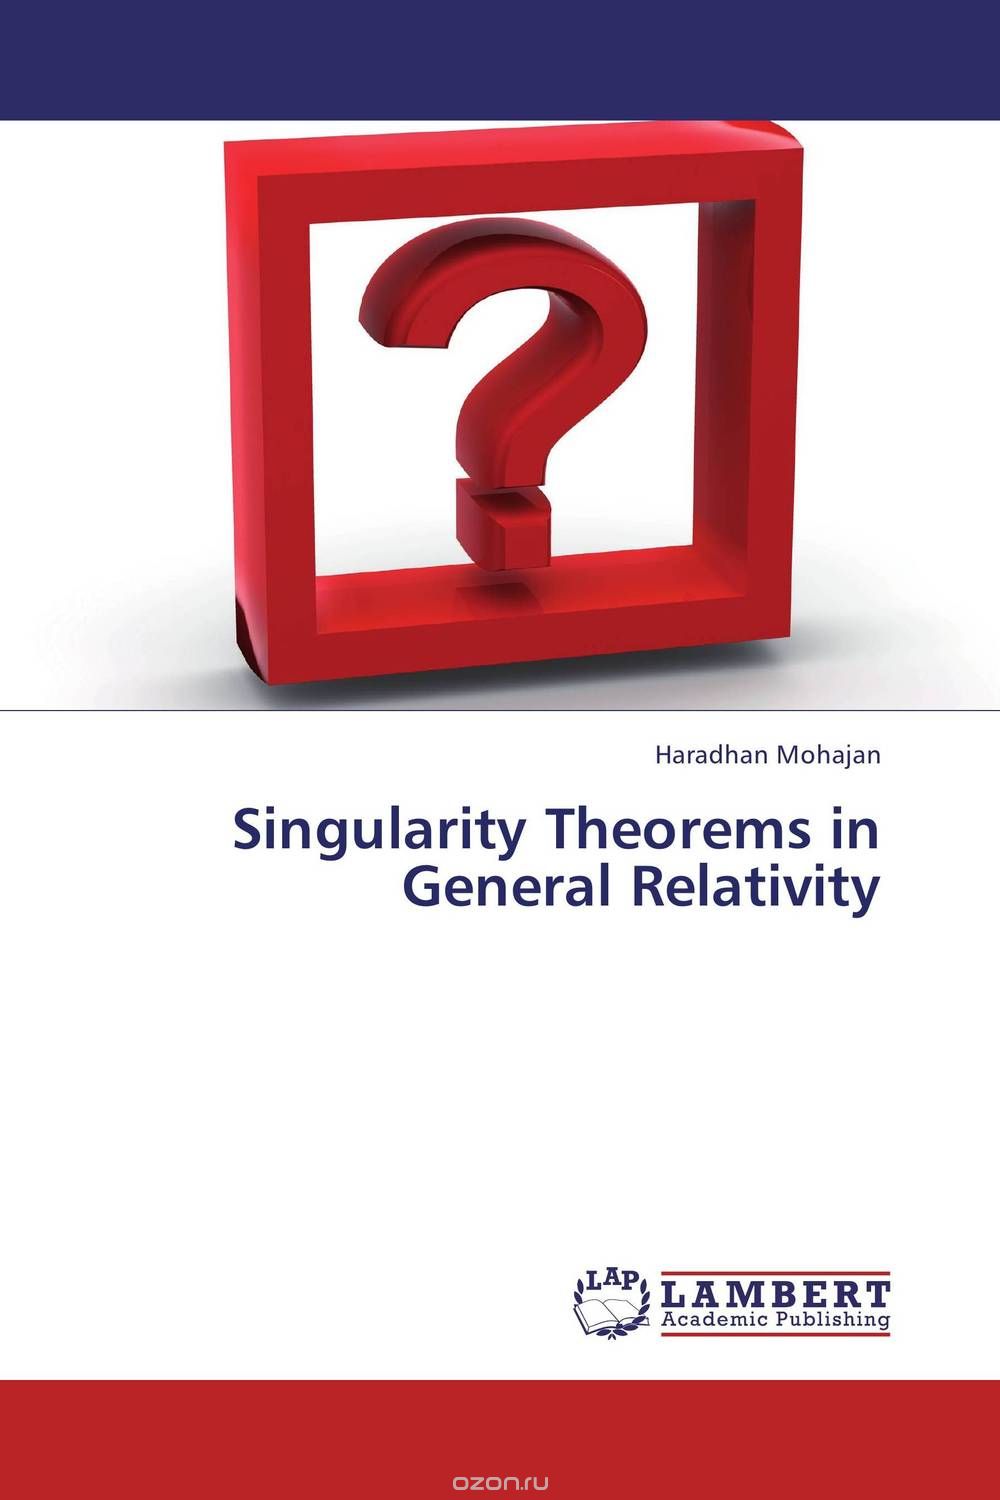 Скачать книгу "Singularity Theorems in General Relativity"